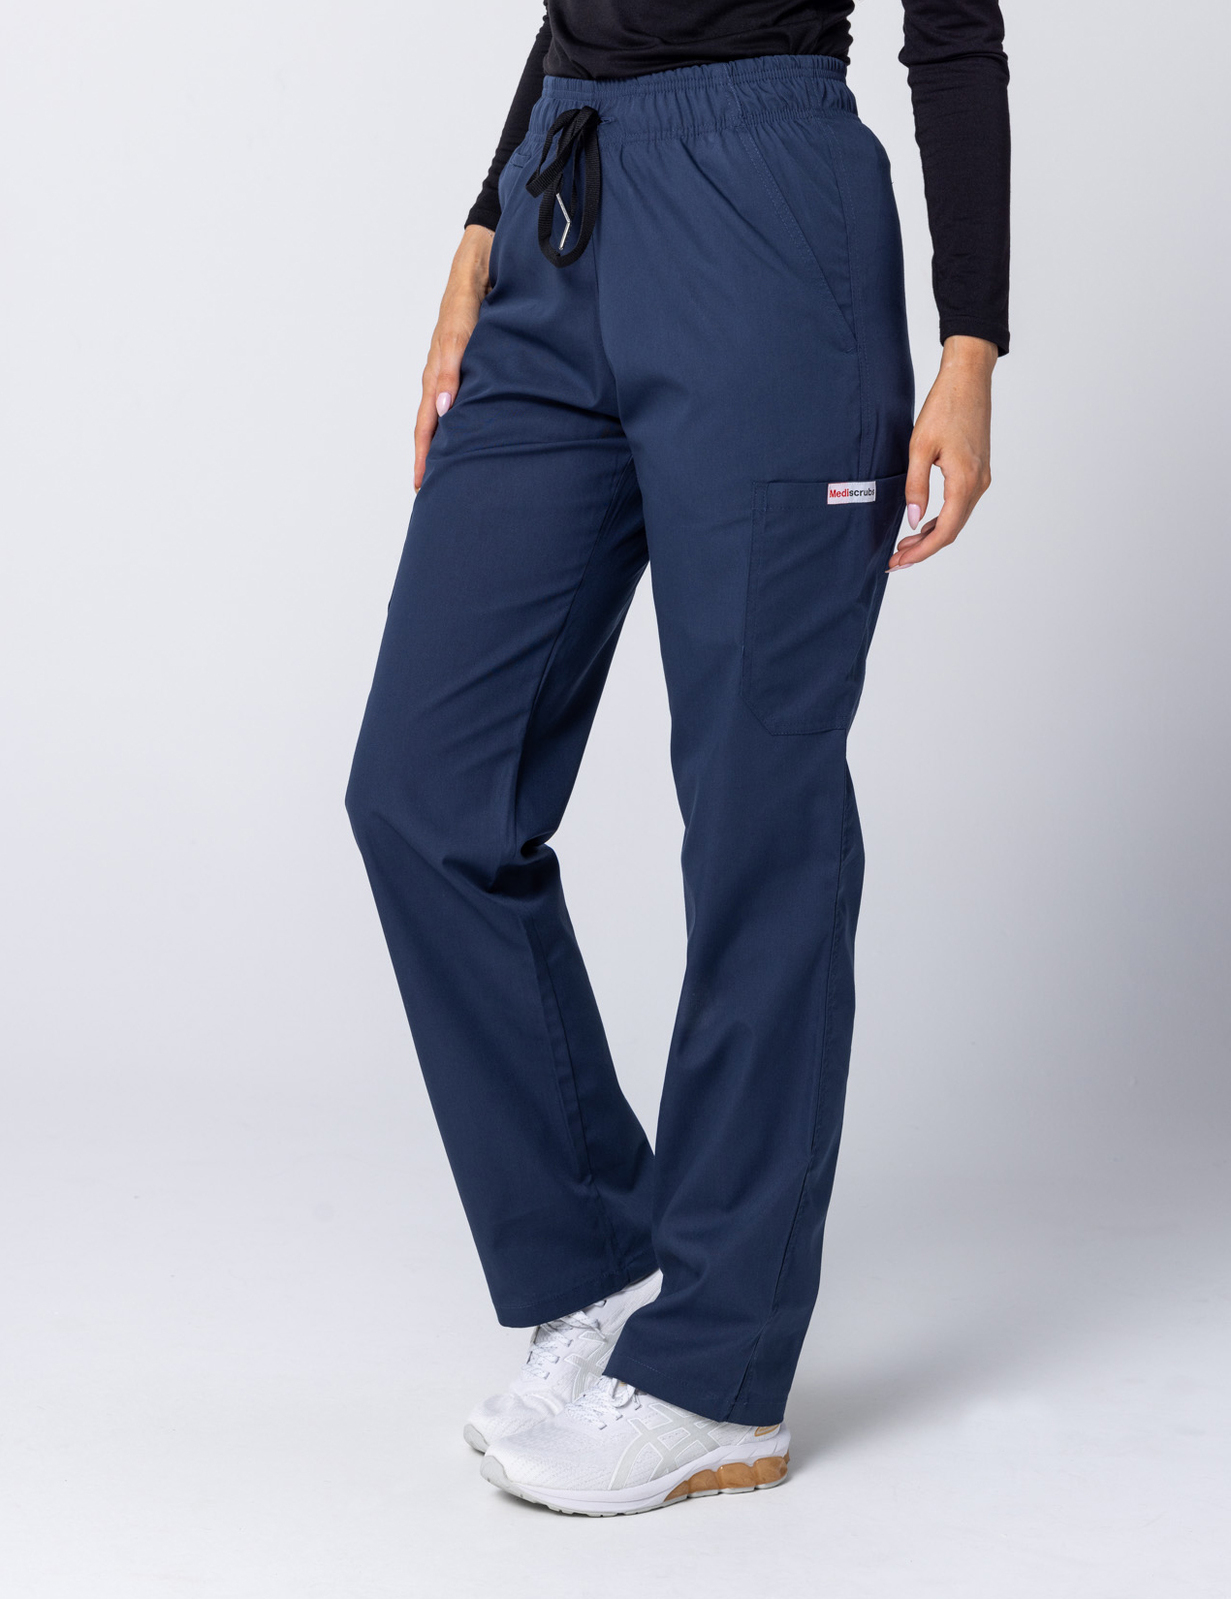 Women's Cargo Performance Pants - Navy - 2X Large